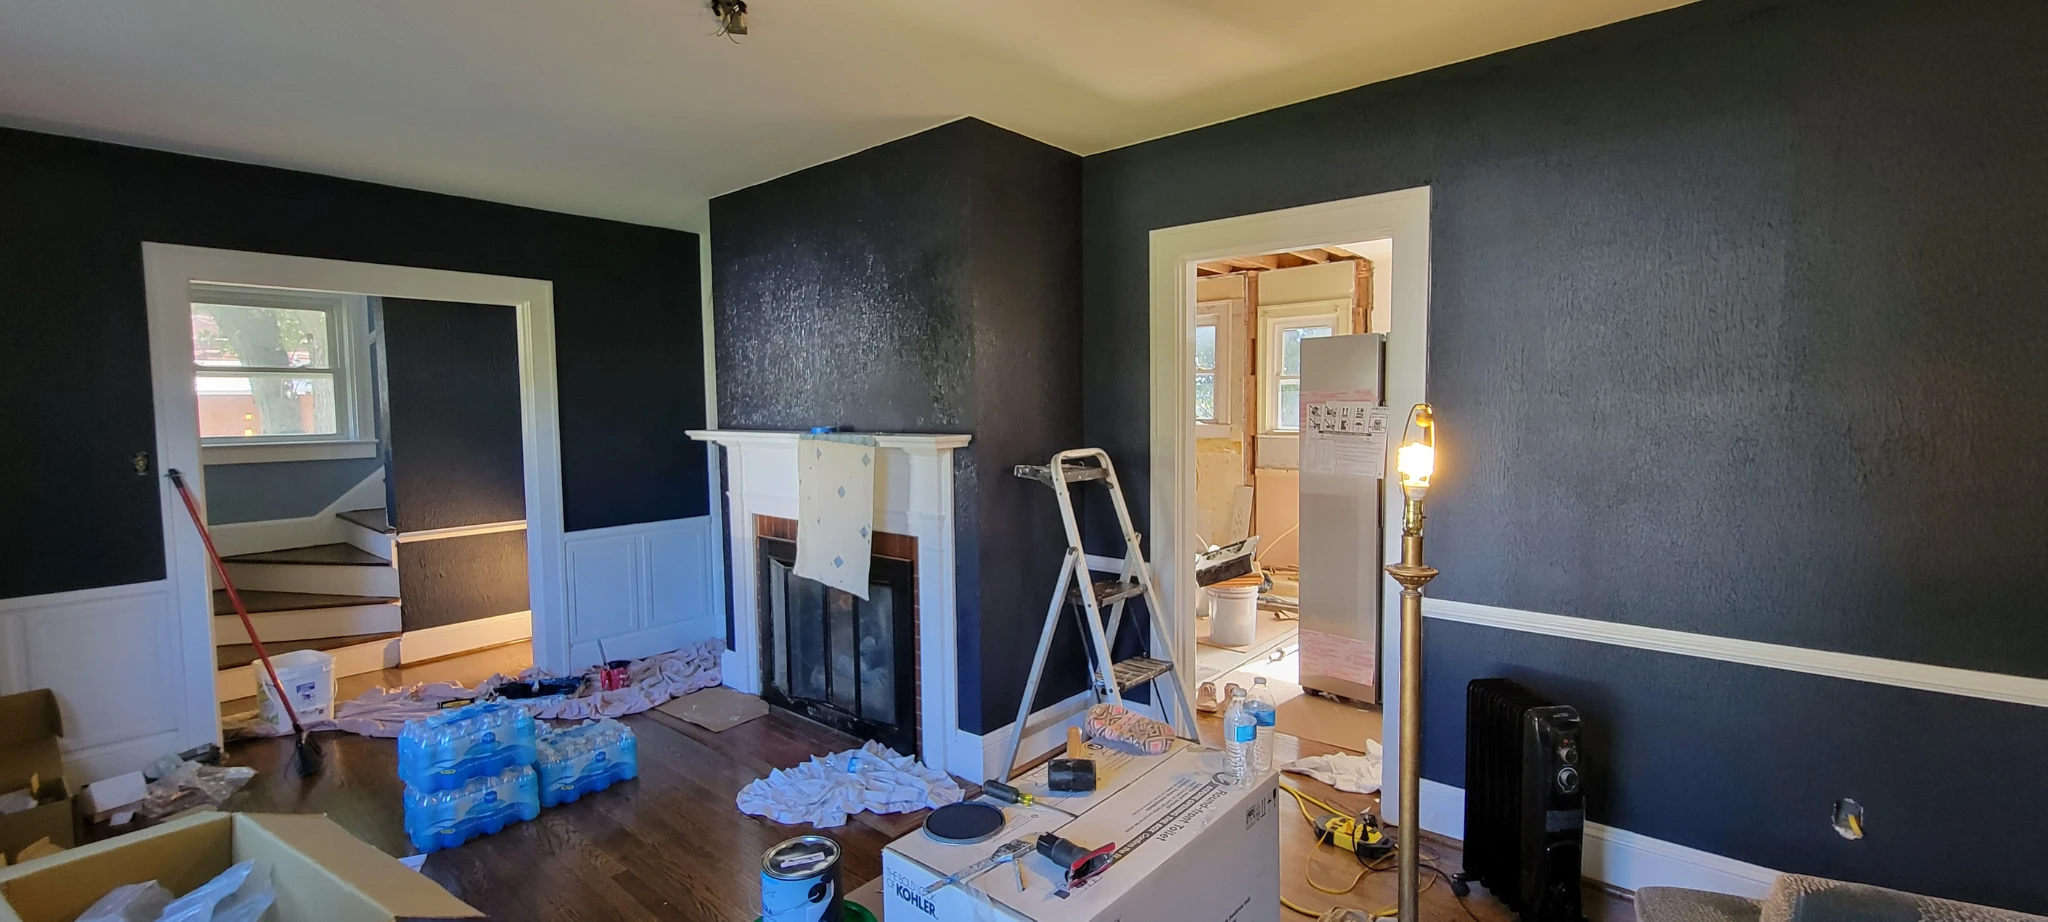 The Living Room Renovation Progress